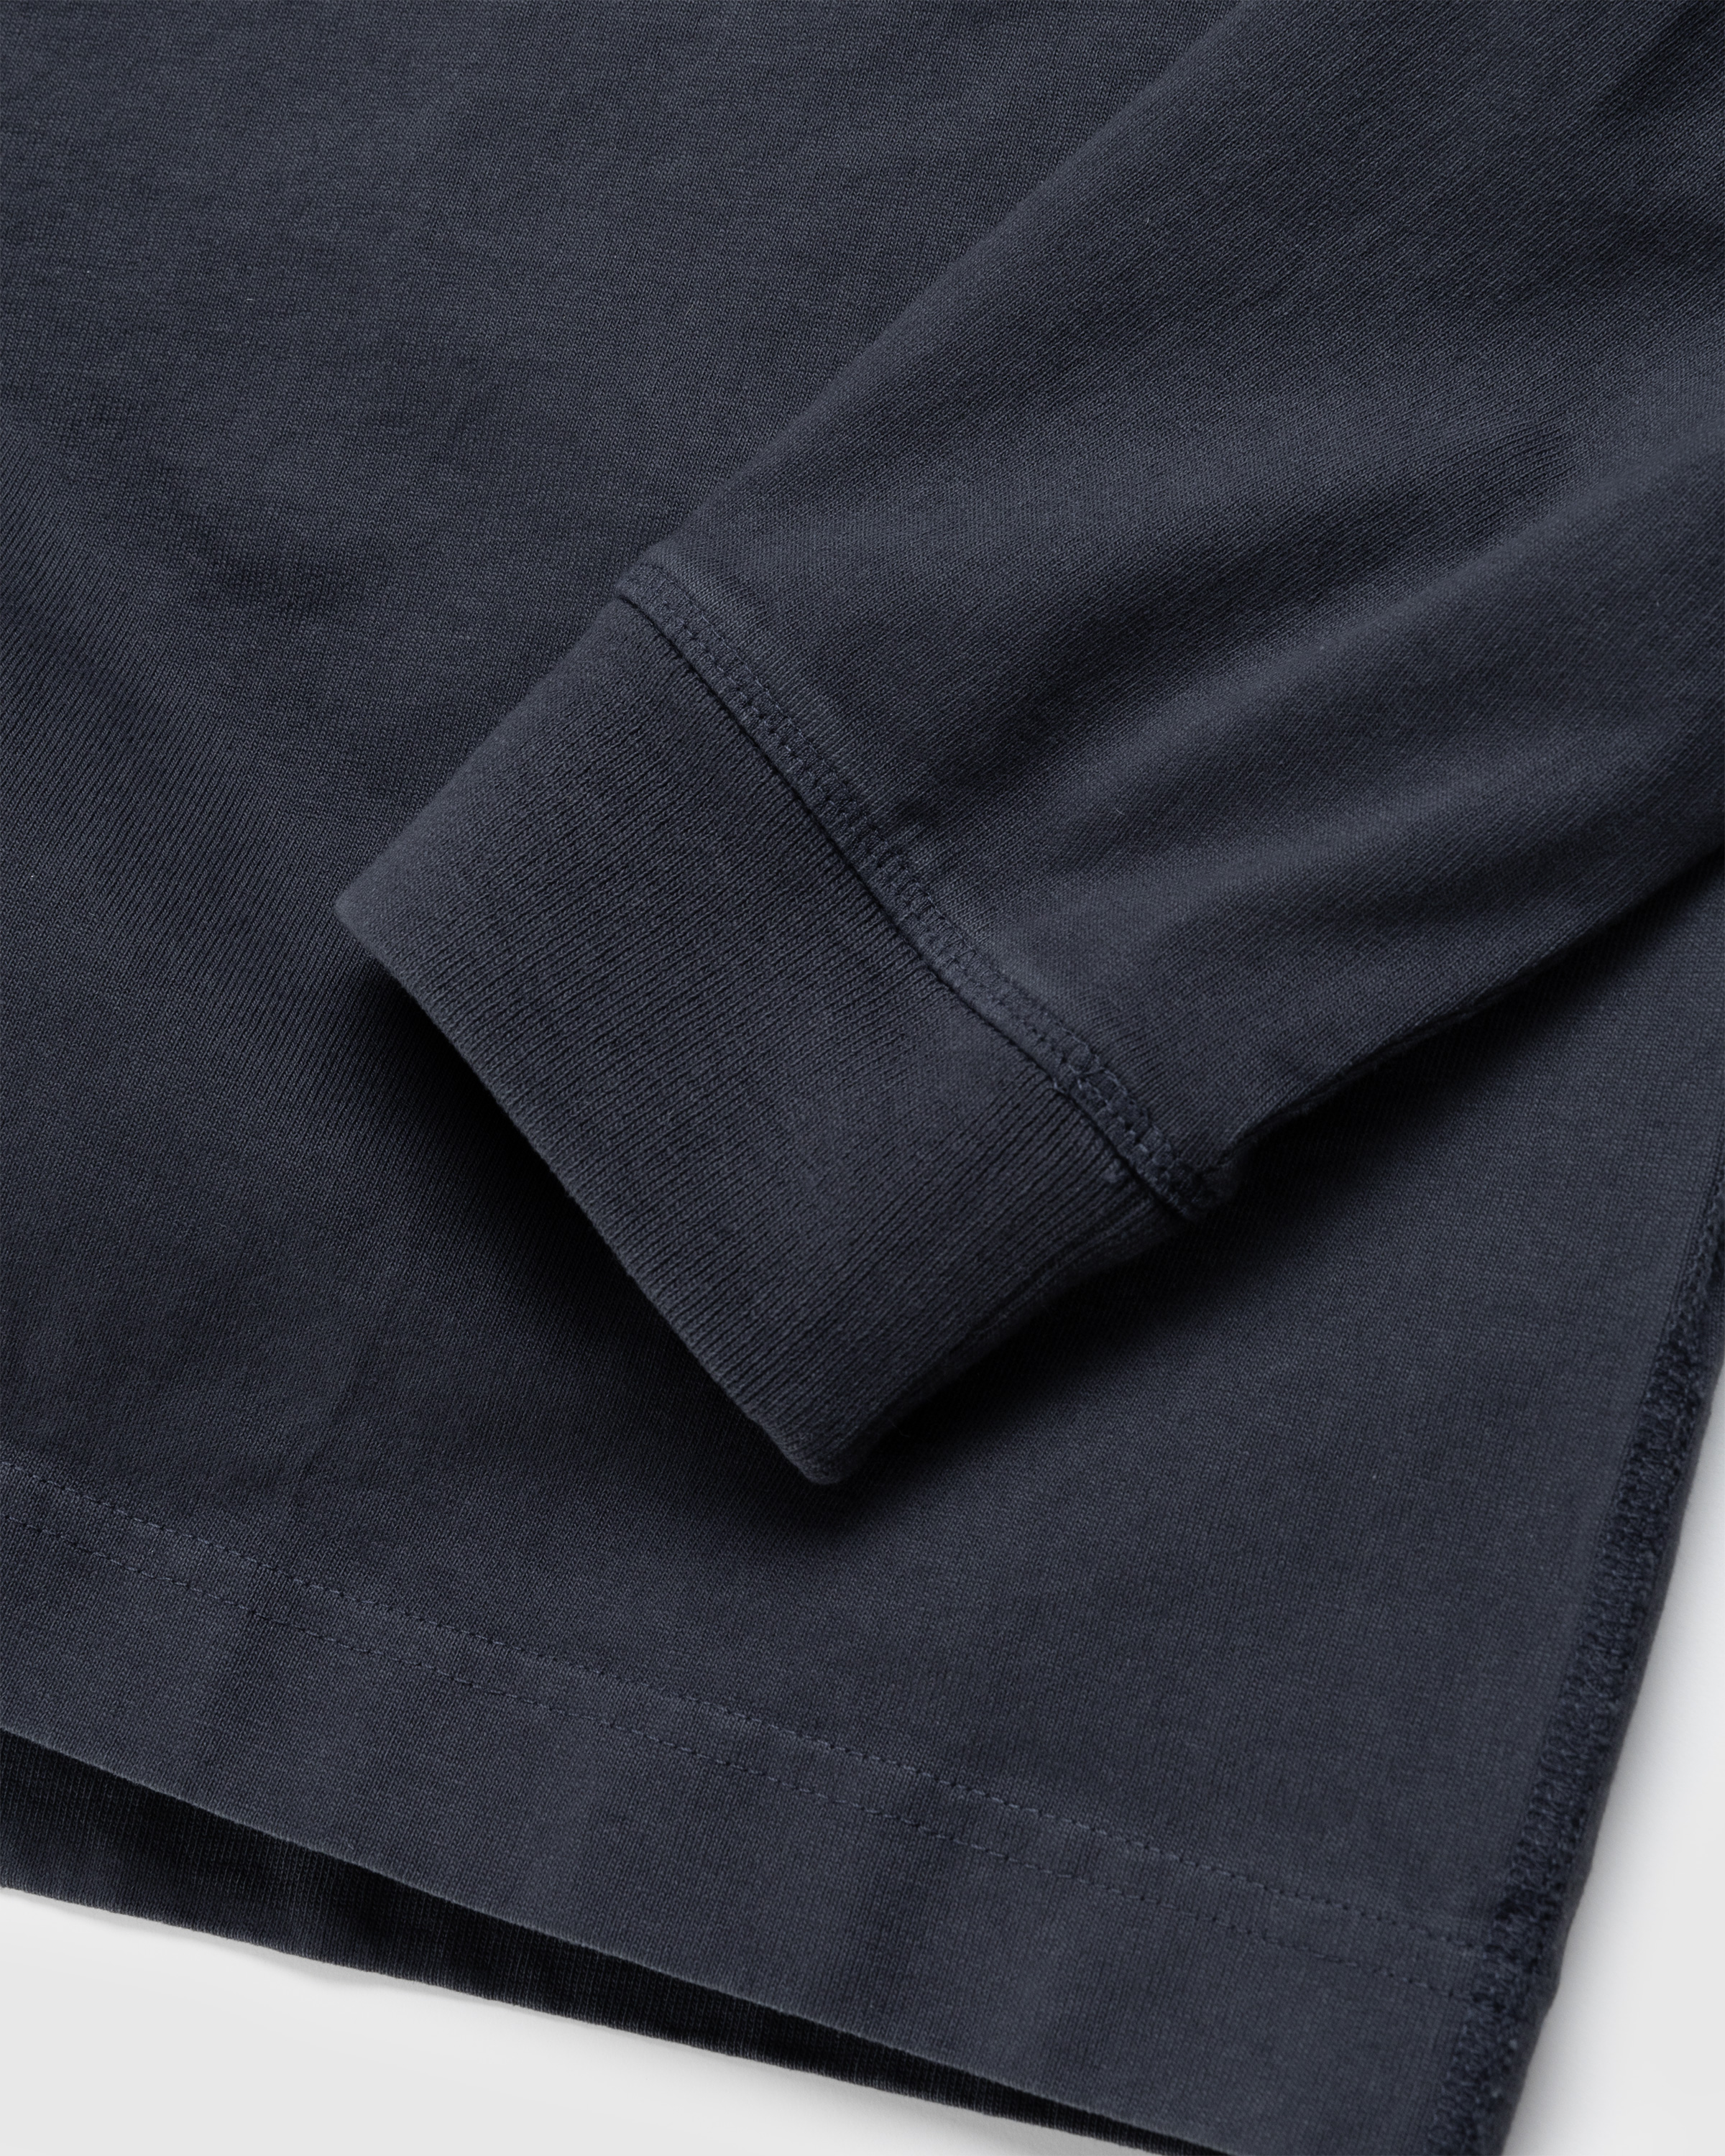 Acne Studios - Logo Long-Sleeve T-Shirt Black - Clothing - Black - Image 7